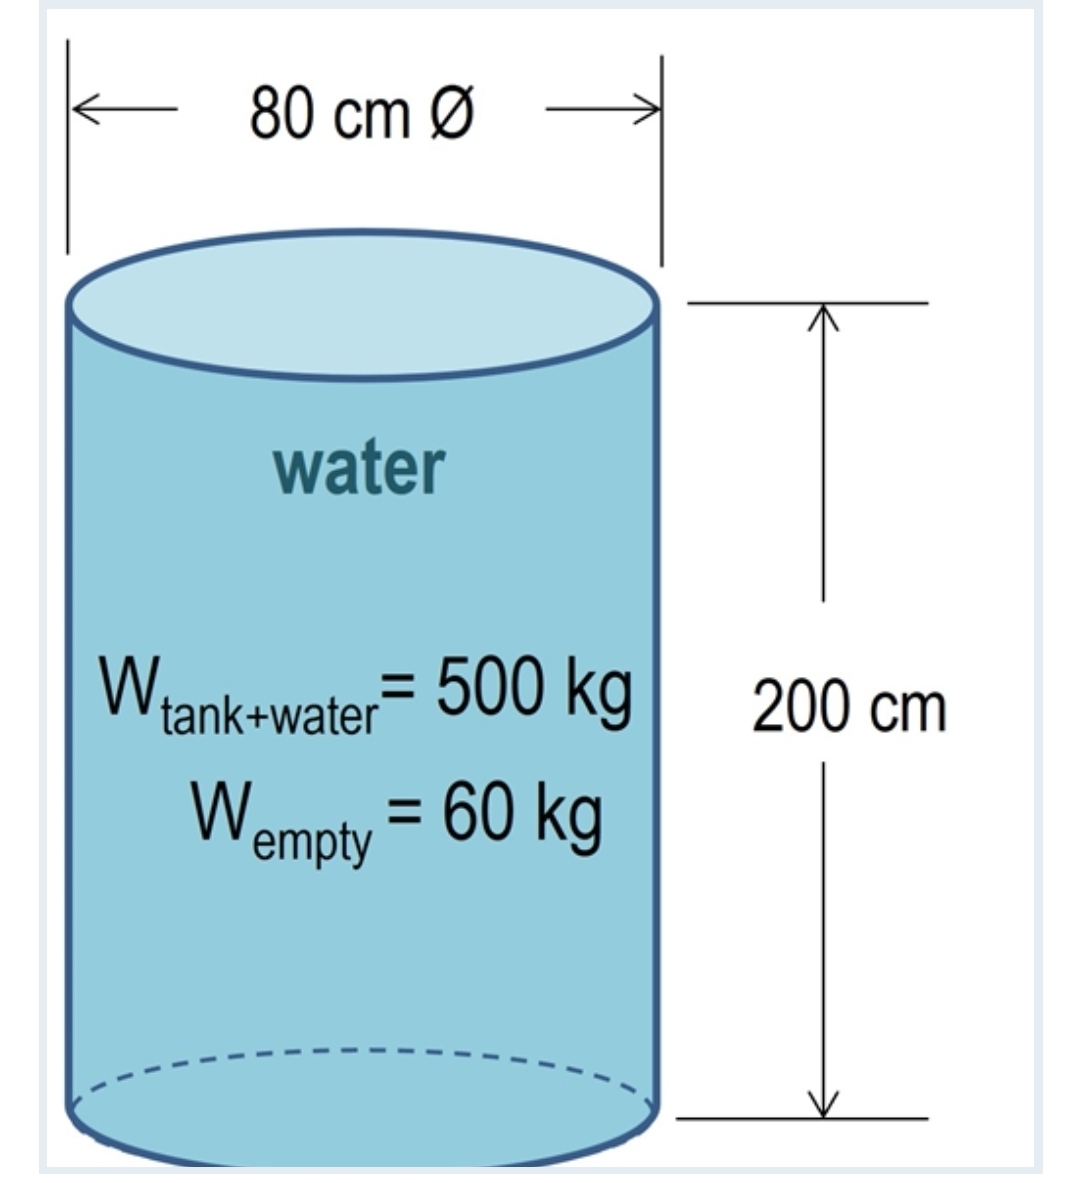 80 cm Ø
water
Wtank+water = 500 kg
Wempty
= 60 kg
200 cm